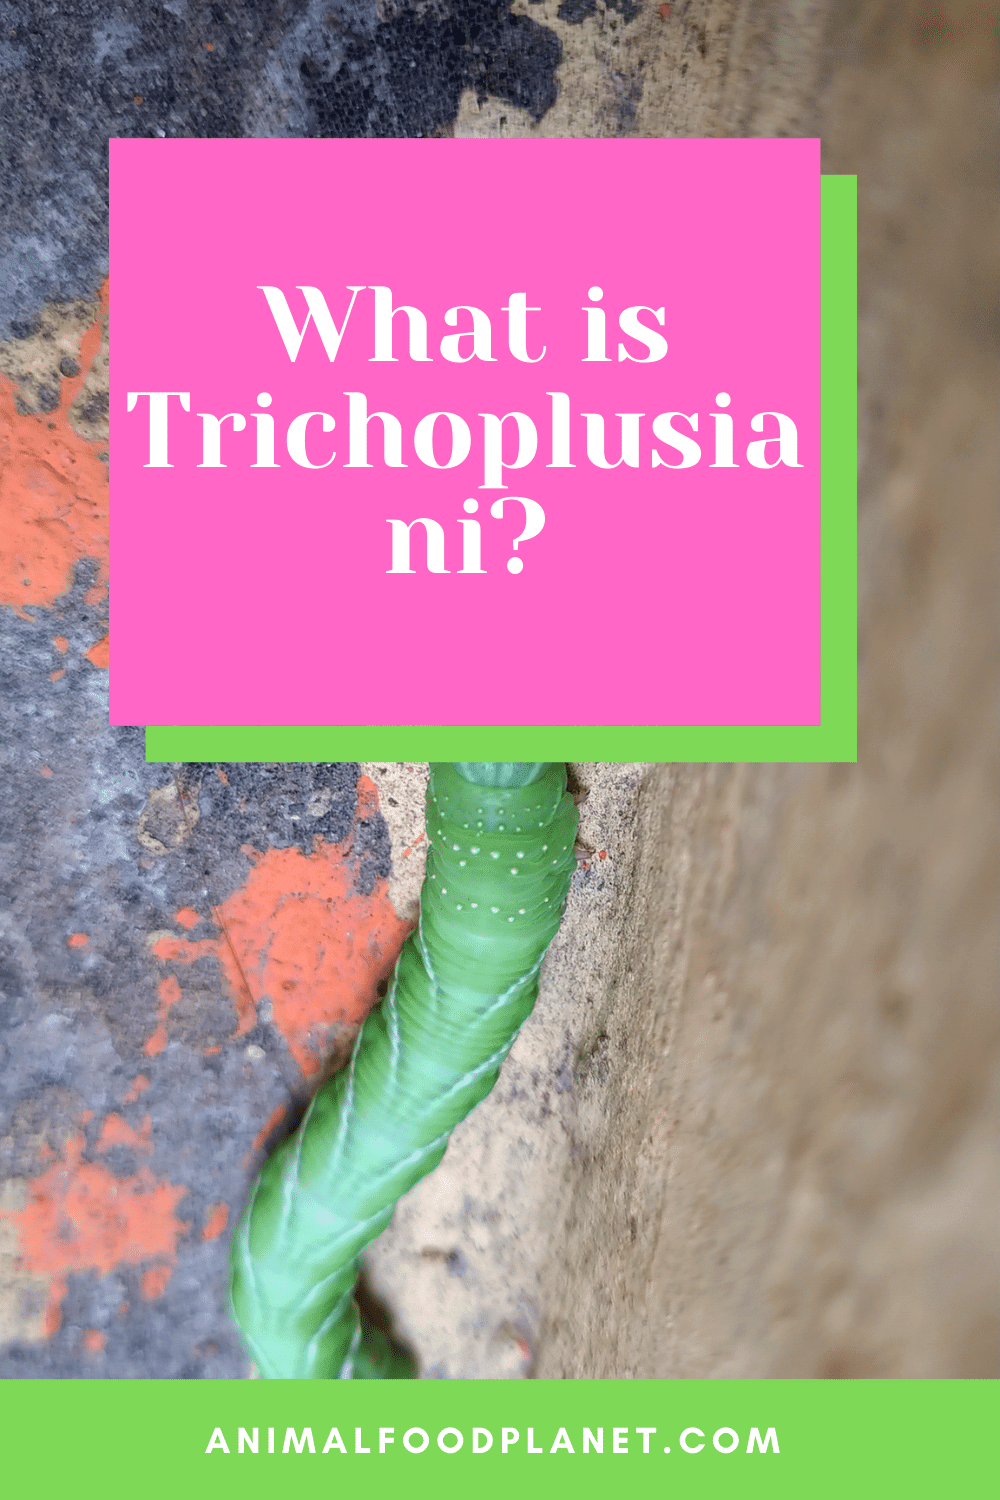 What Is Trichoplusia ni?